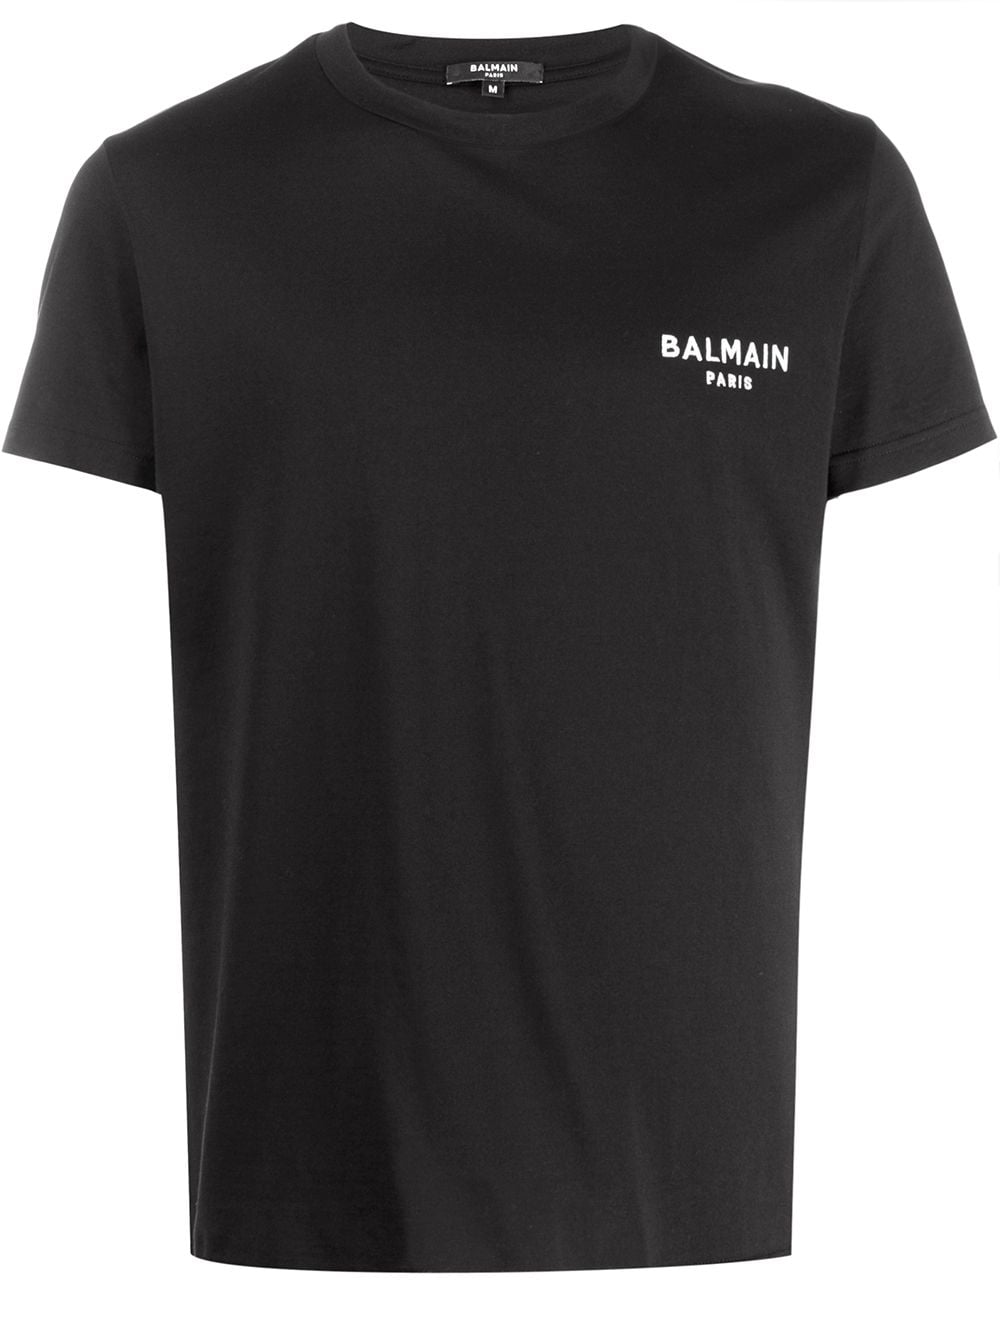 фото Balmain футболка с вышитым логотипом